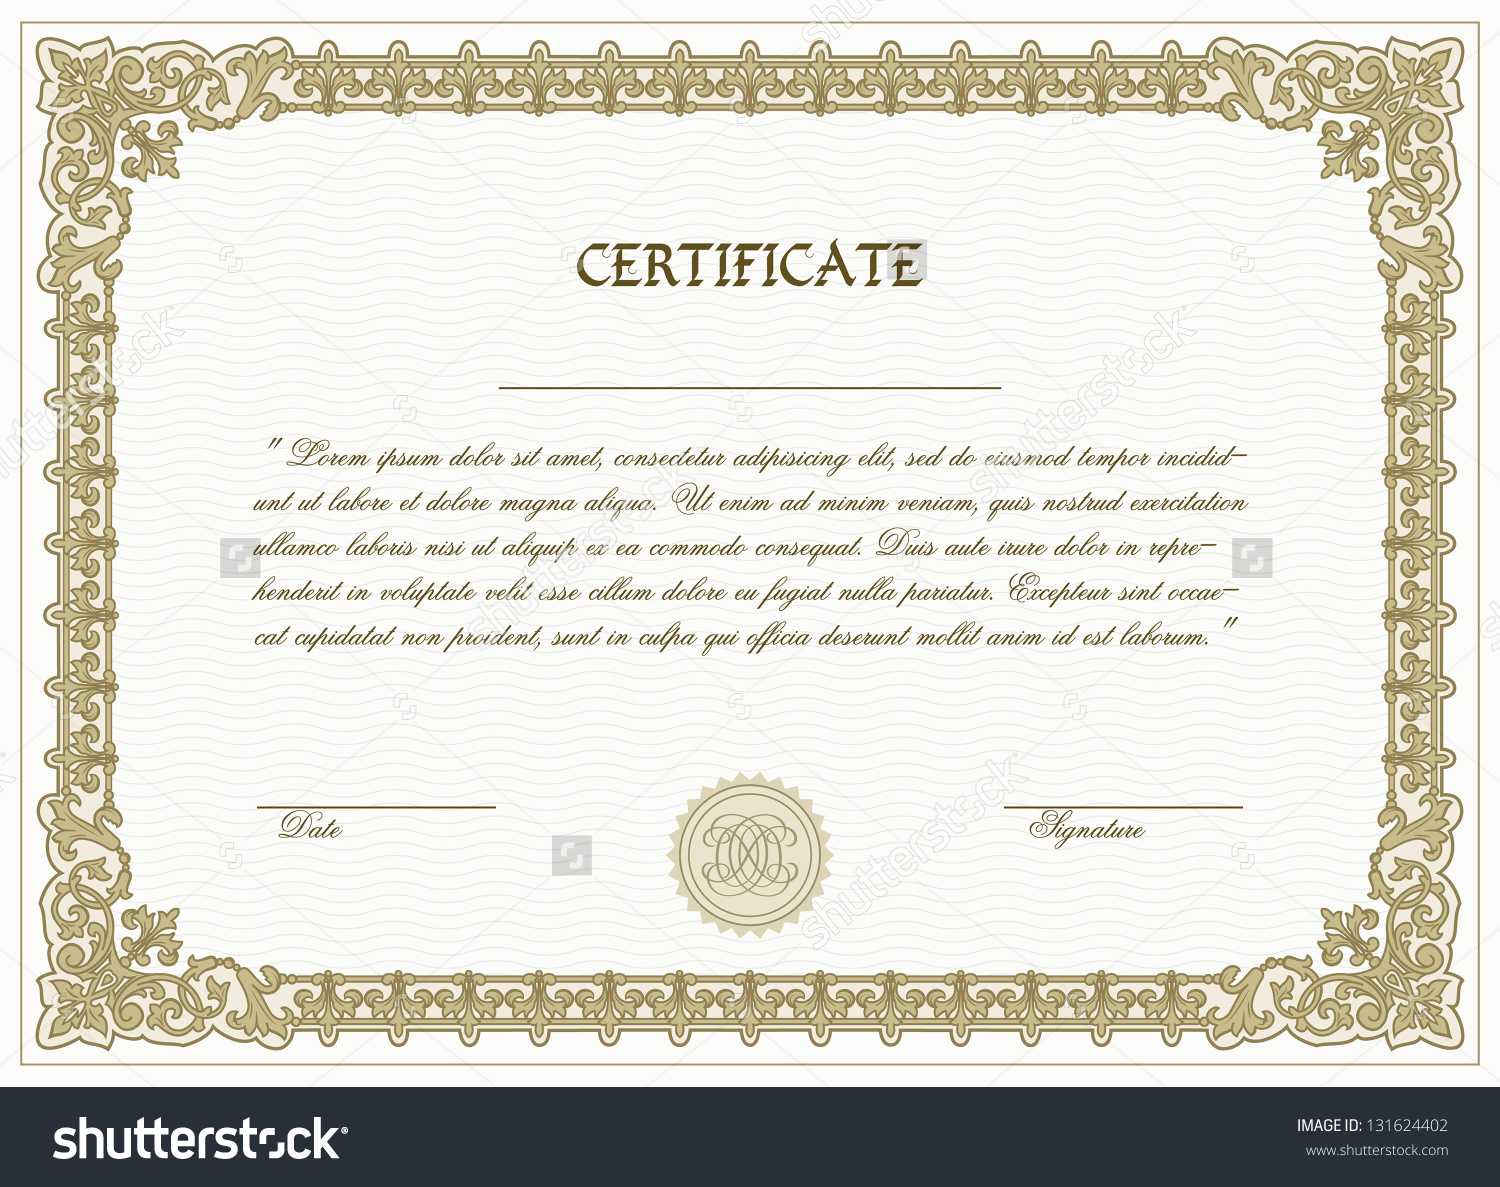 High Resolution Certificate Template - Atlantaauctionco Within High Resolution Certificate Template